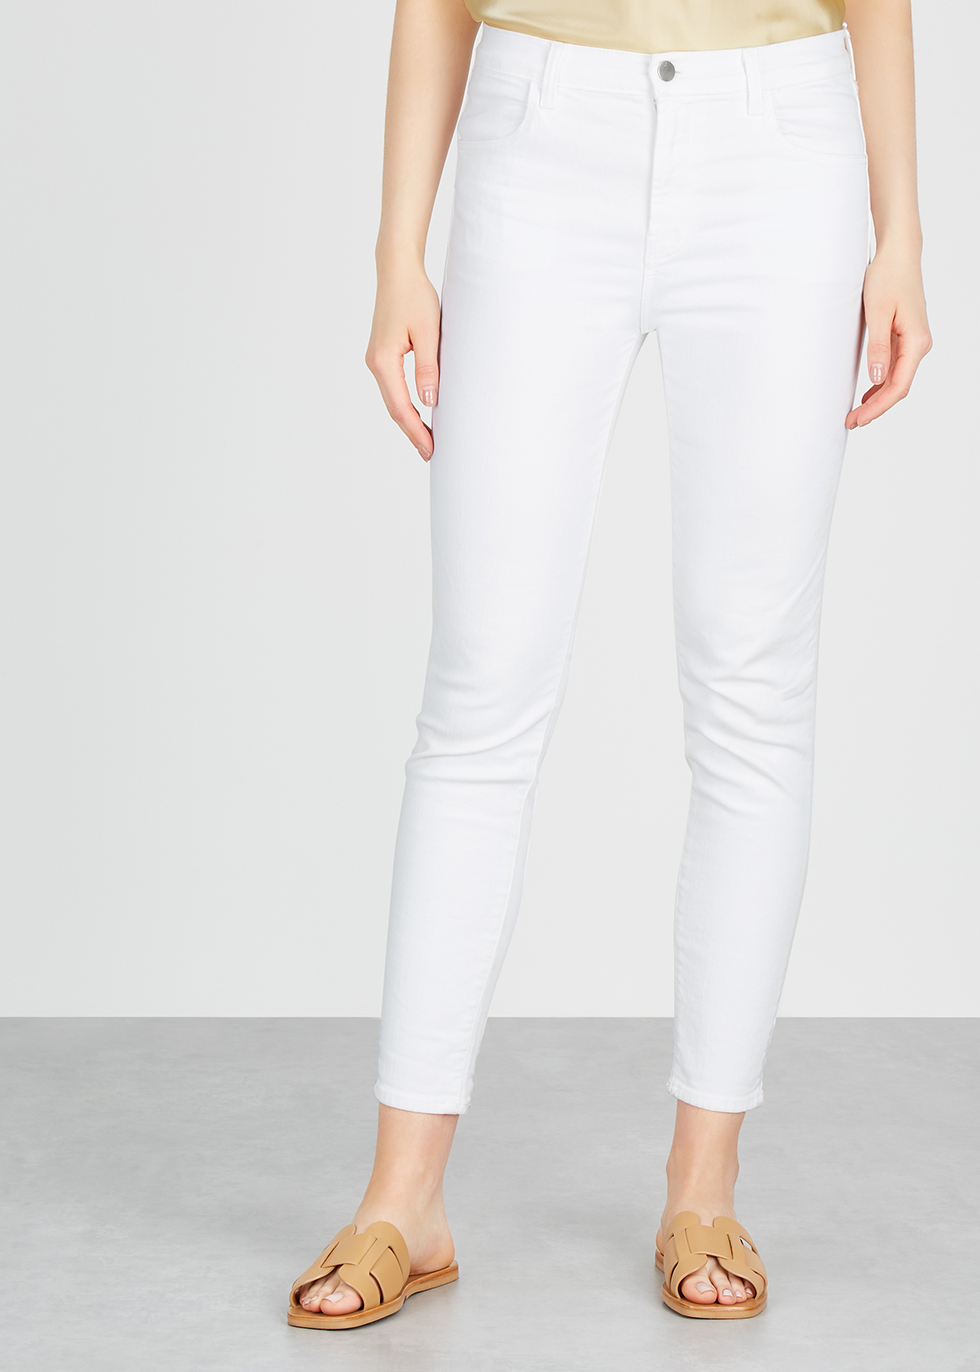 j brand alana white jeans